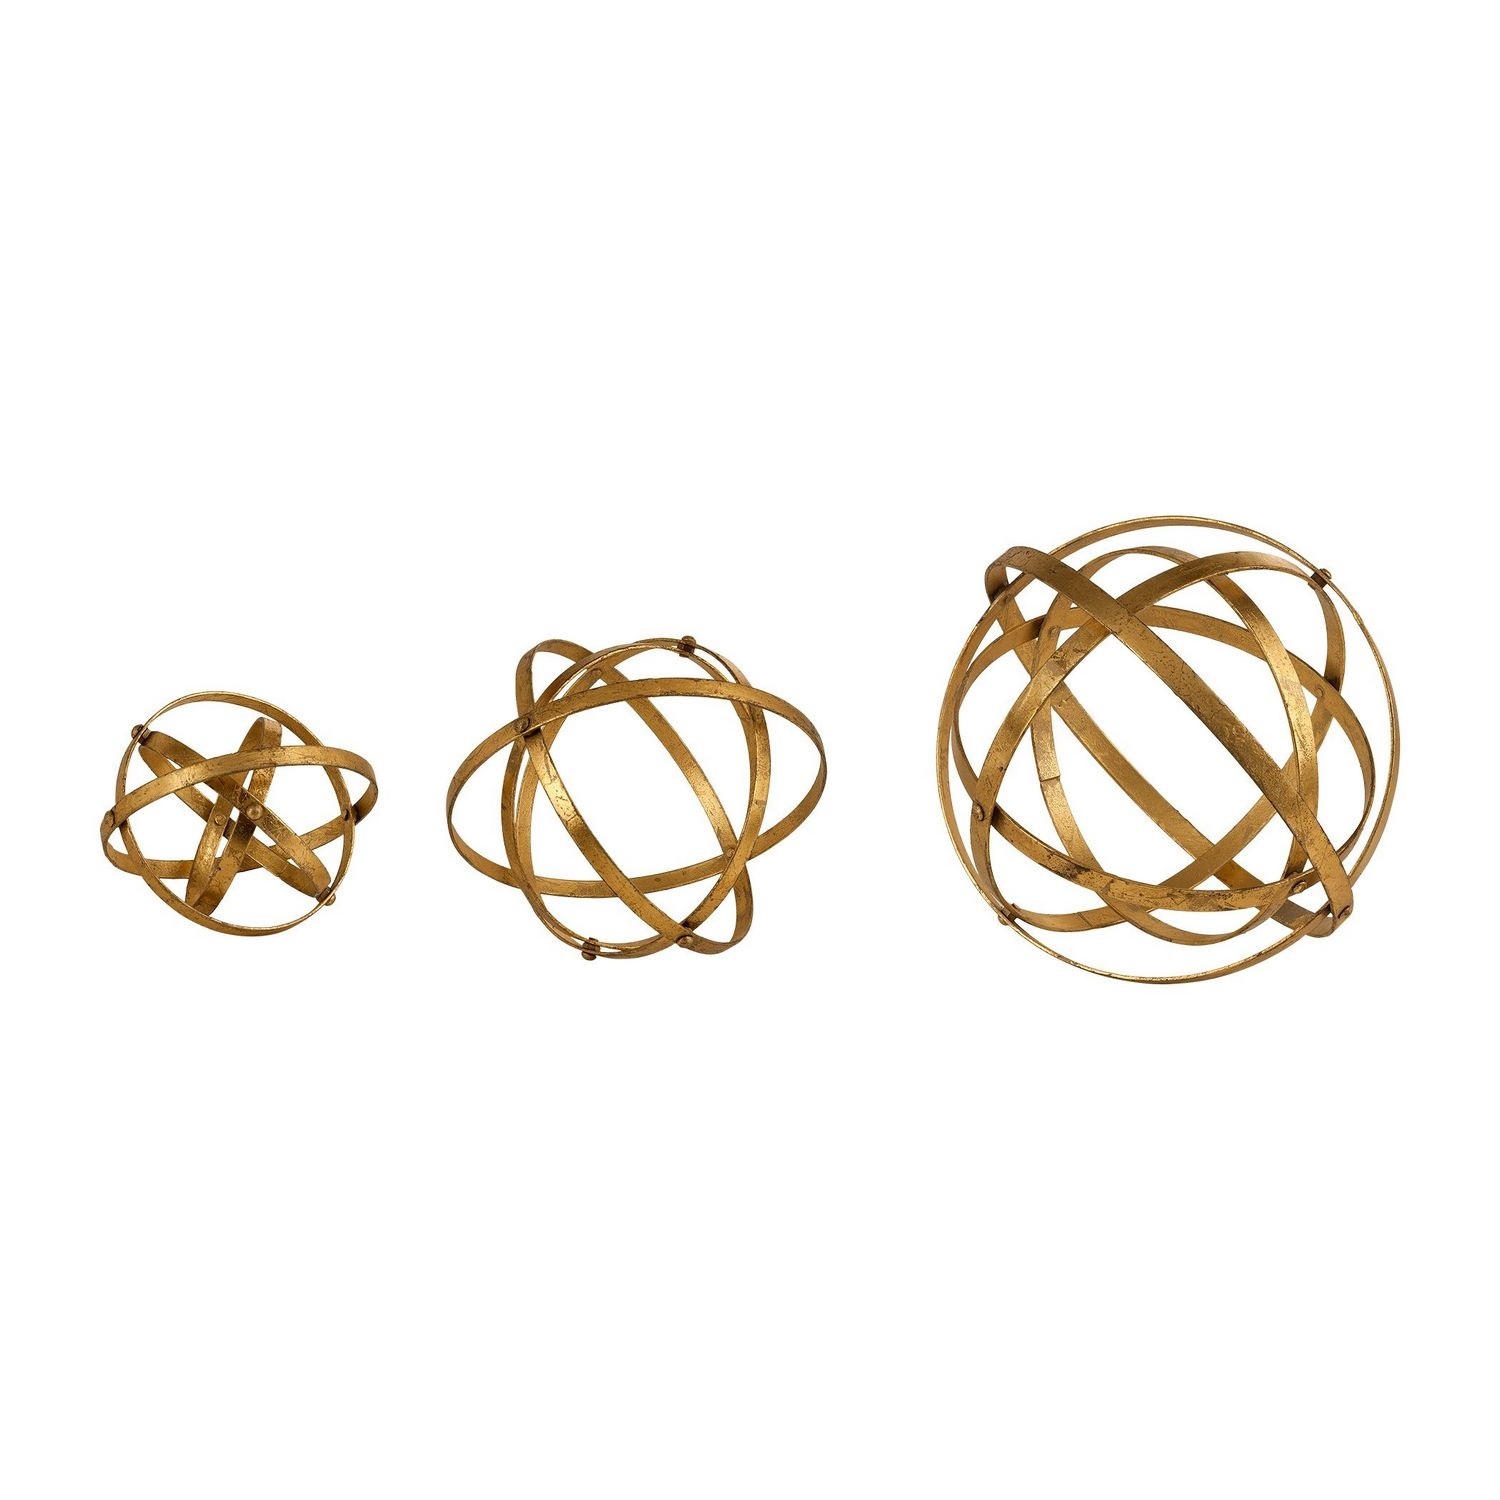 Uttermost Stetson Spheres - Set of 3 - Gold